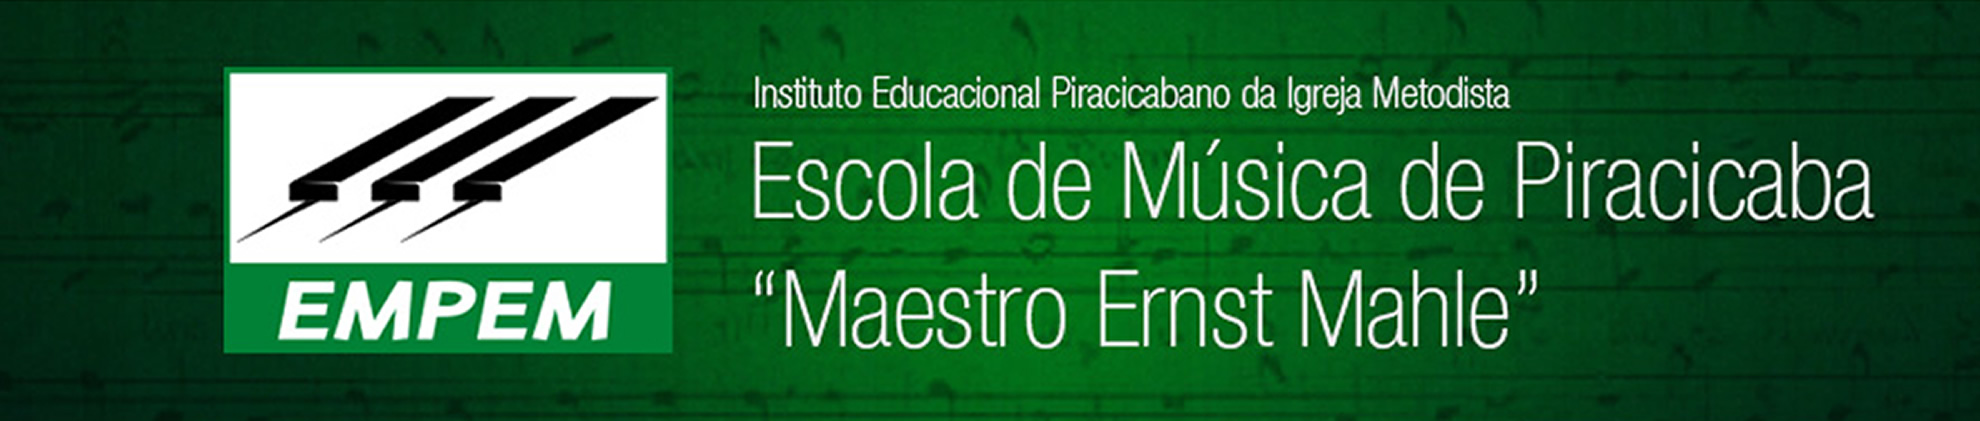 EMPEM - Escola de Msica de Piracicaba 